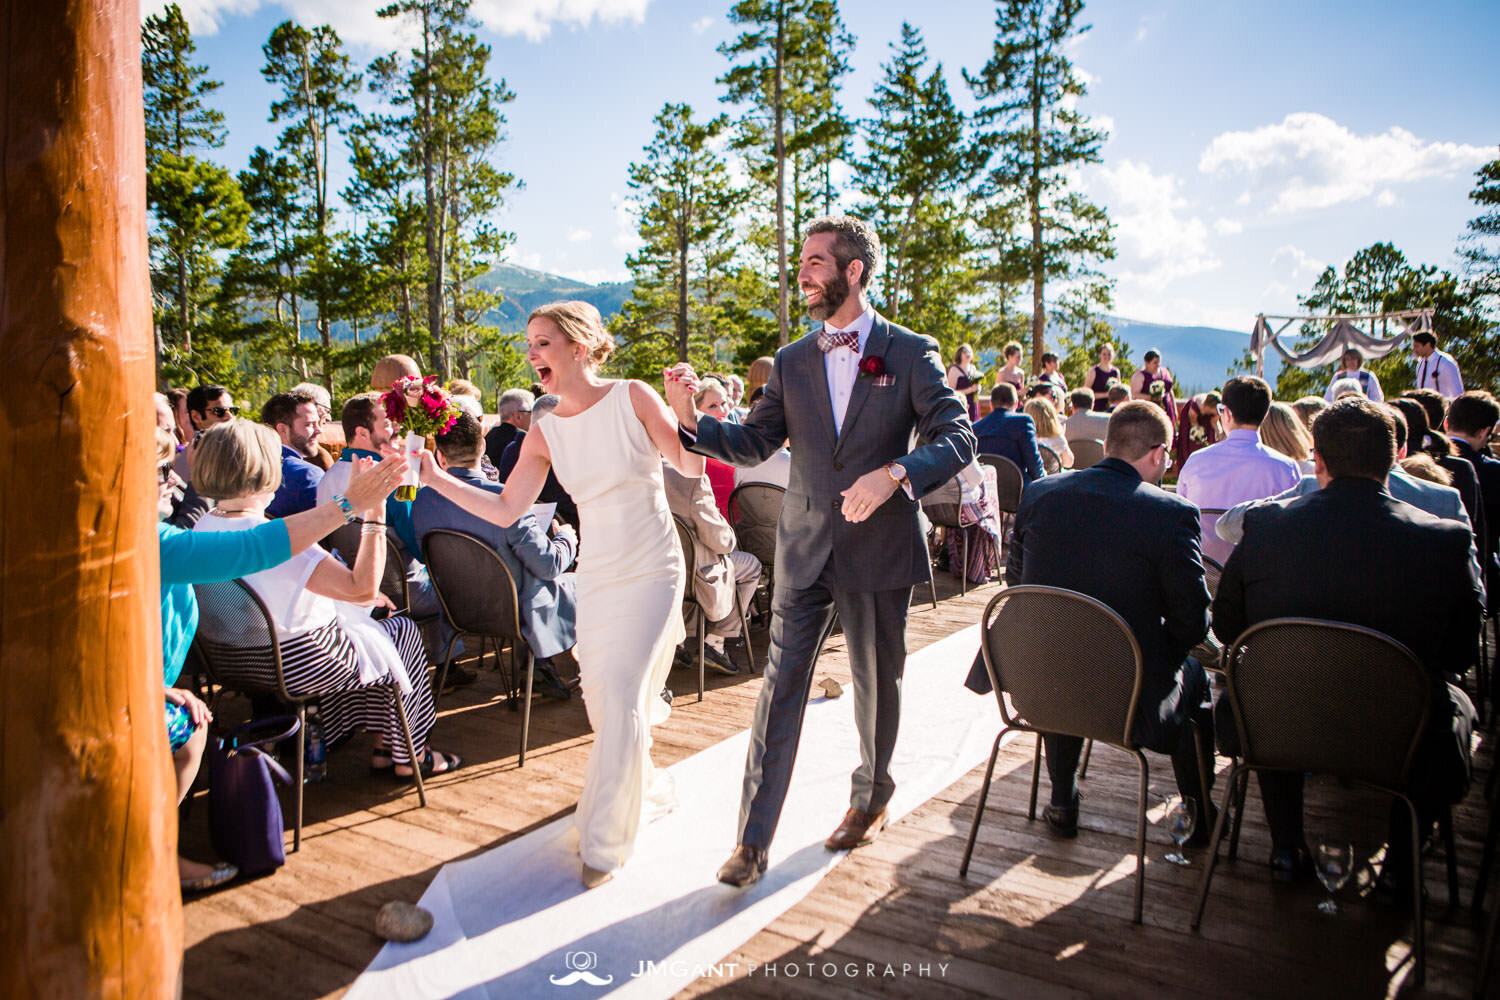  Lodge at Sunspot Wedding photographed by JMGant Photography. 